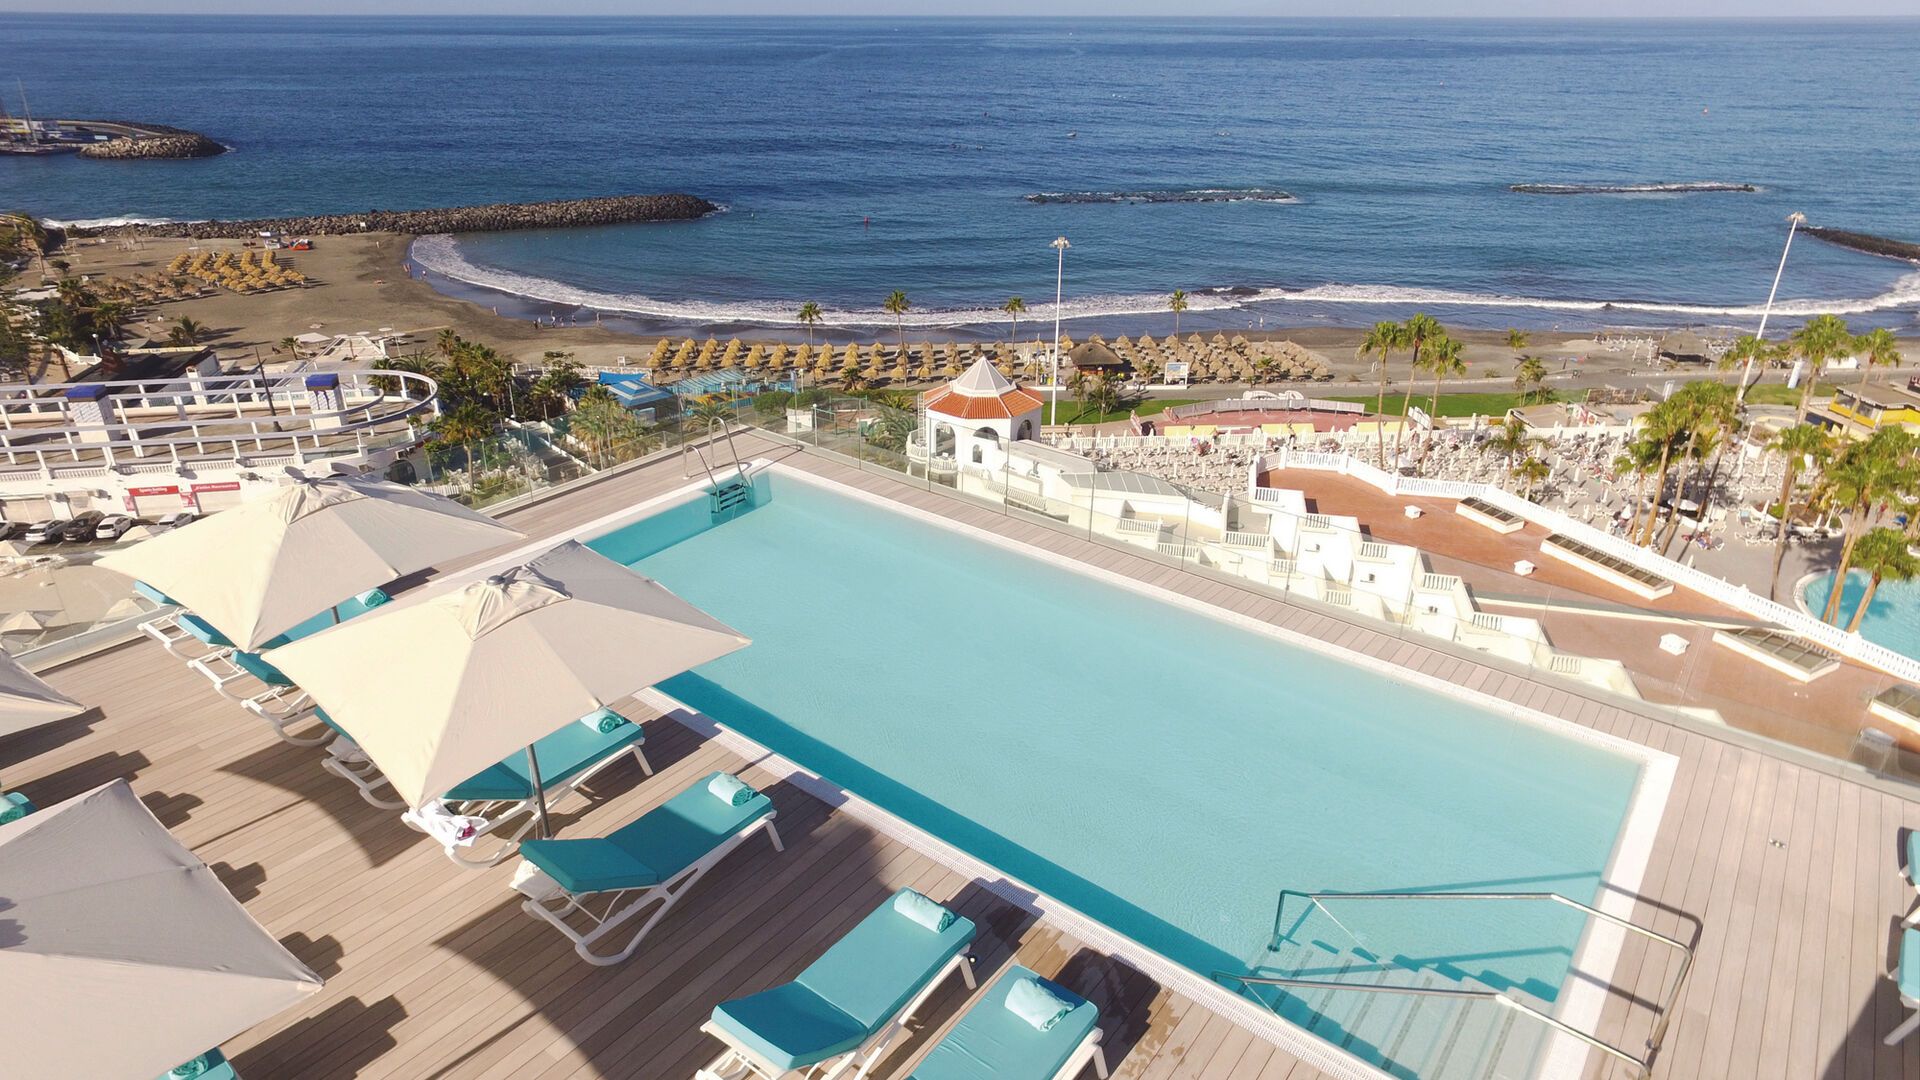 Canaries - Tenerife - Espagne - Hôtel Iberostar Sábila 5*